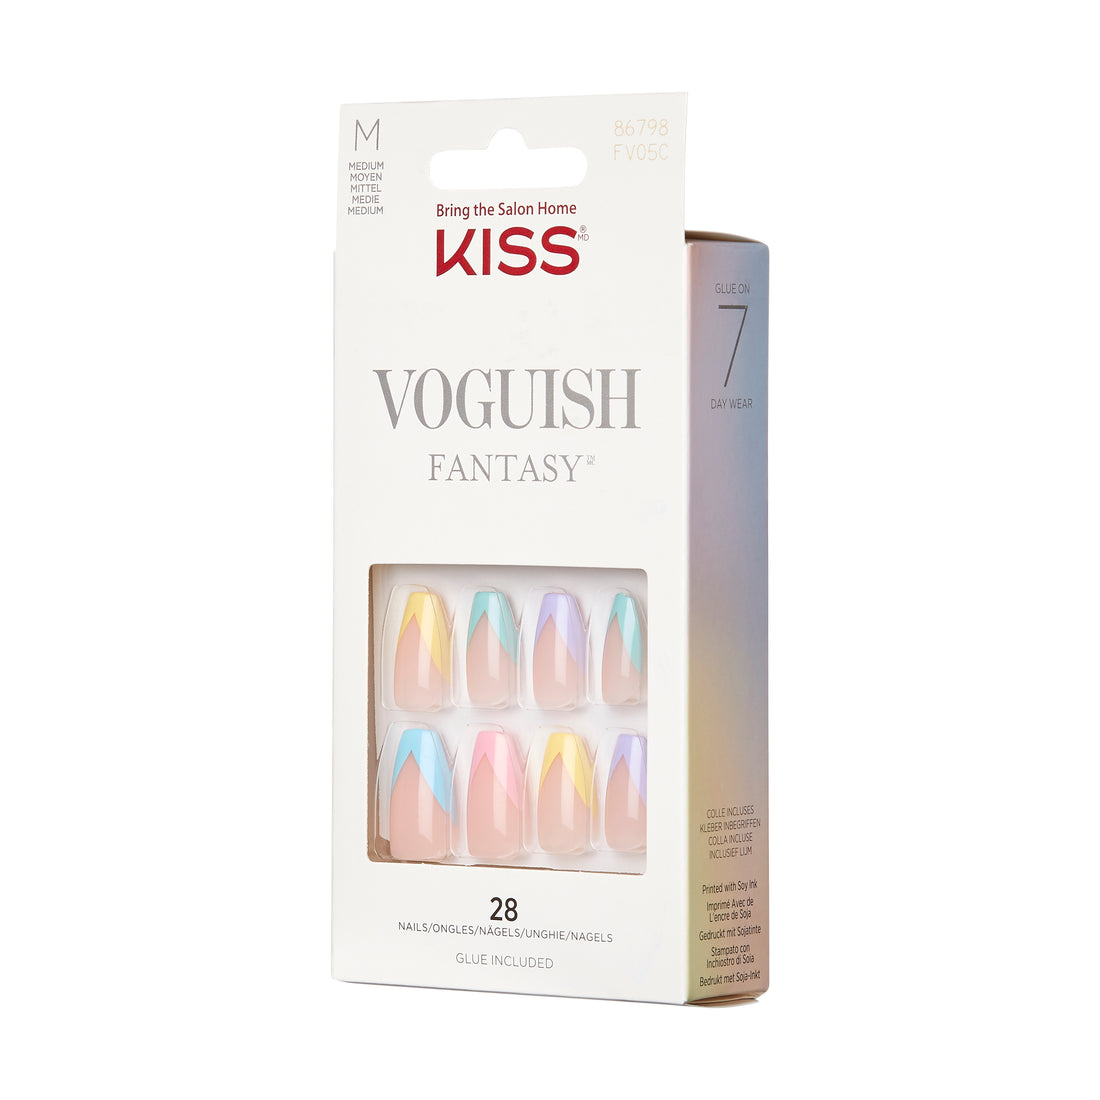 KISS Voguish Fantasy Nails - Disco Ball